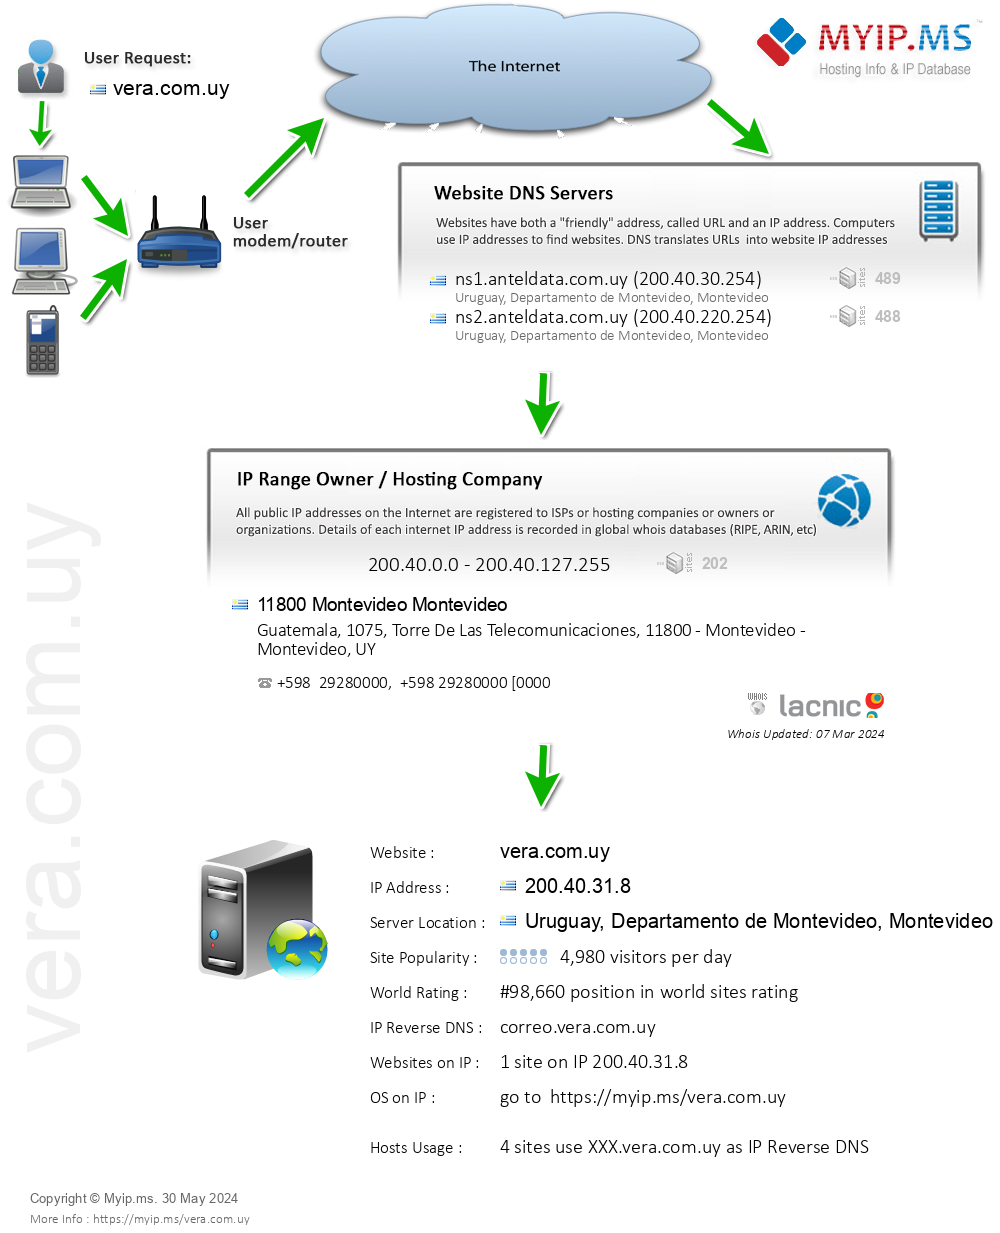 Vera.com.uy - Website Hosting Visual IP Diagram